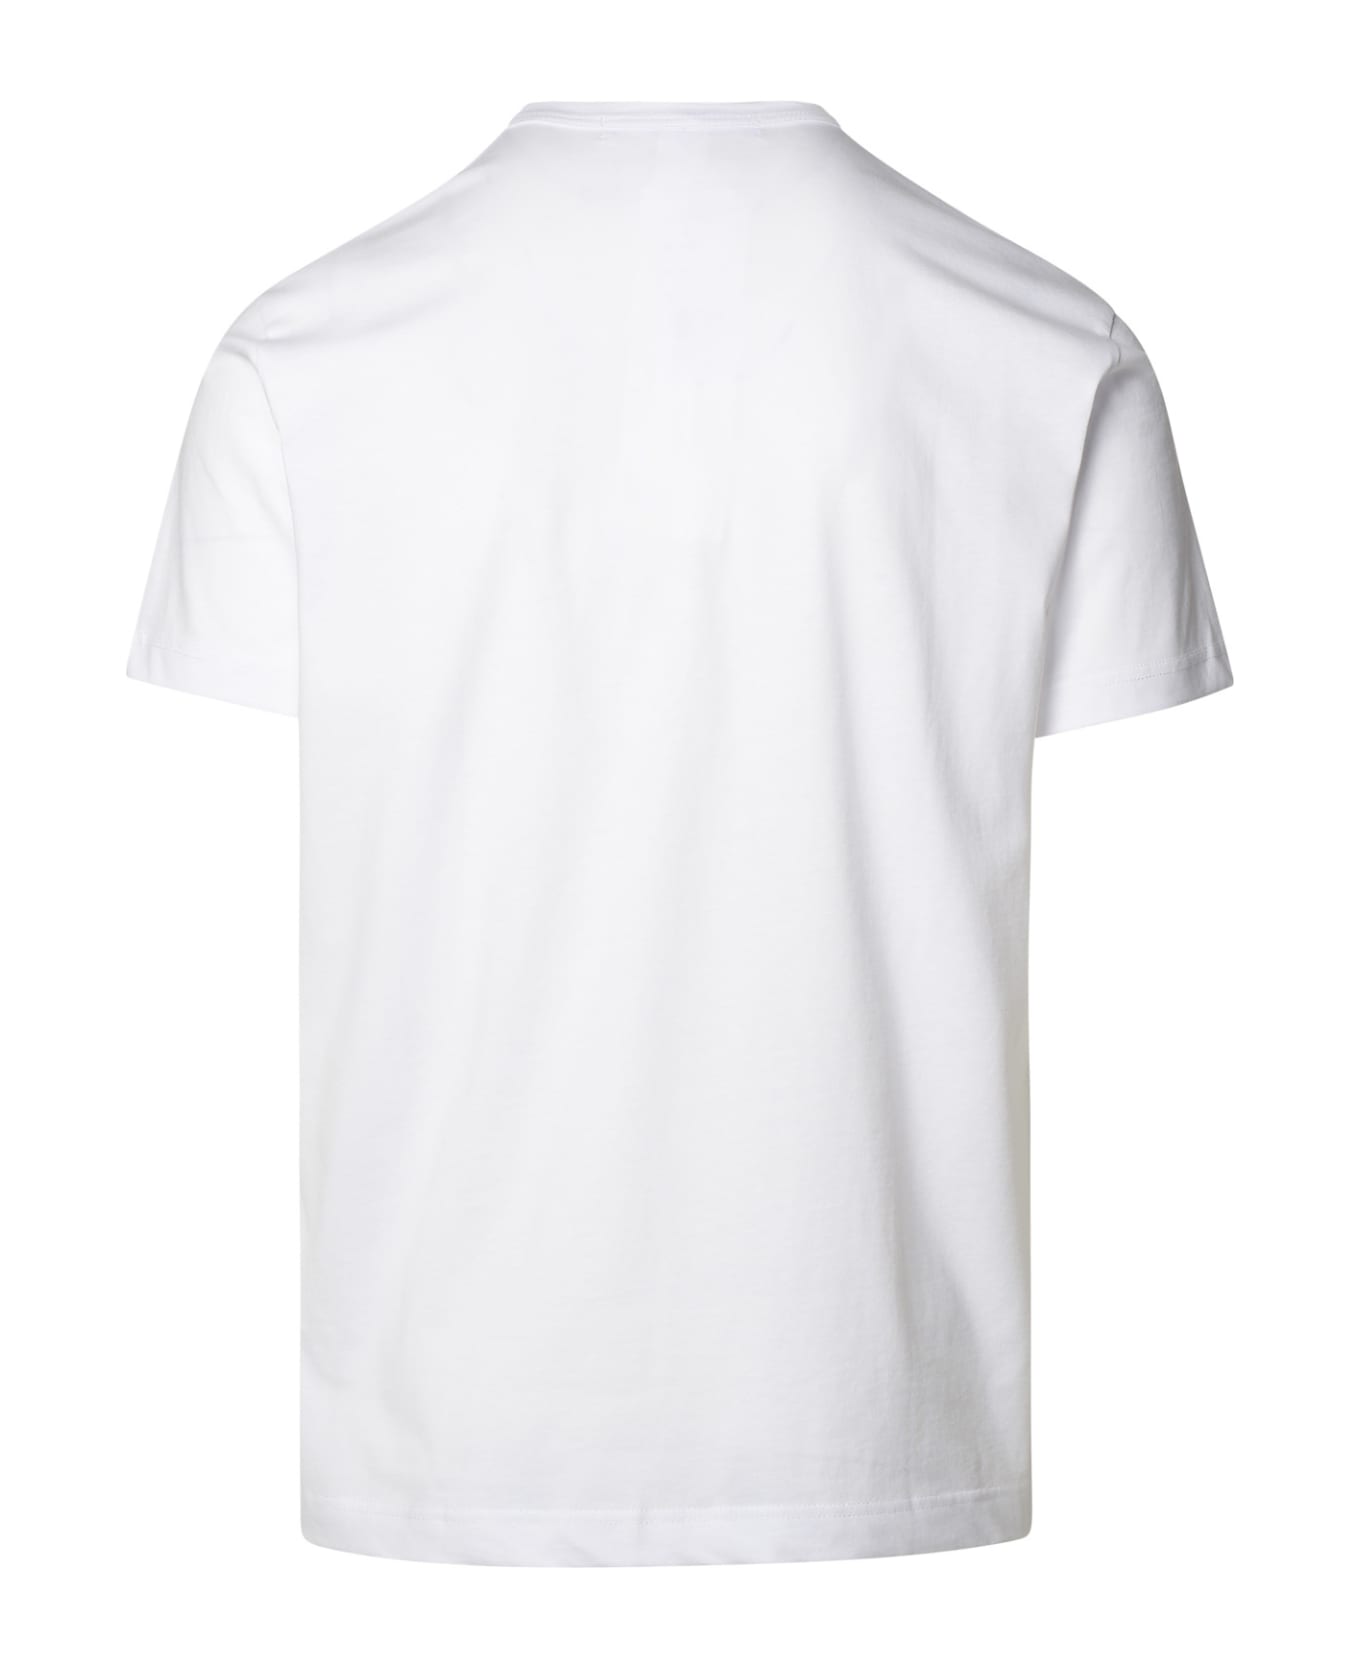 Comme des Garçons Shirt 'marilyn Monroe' White Cotton T-shirt - White